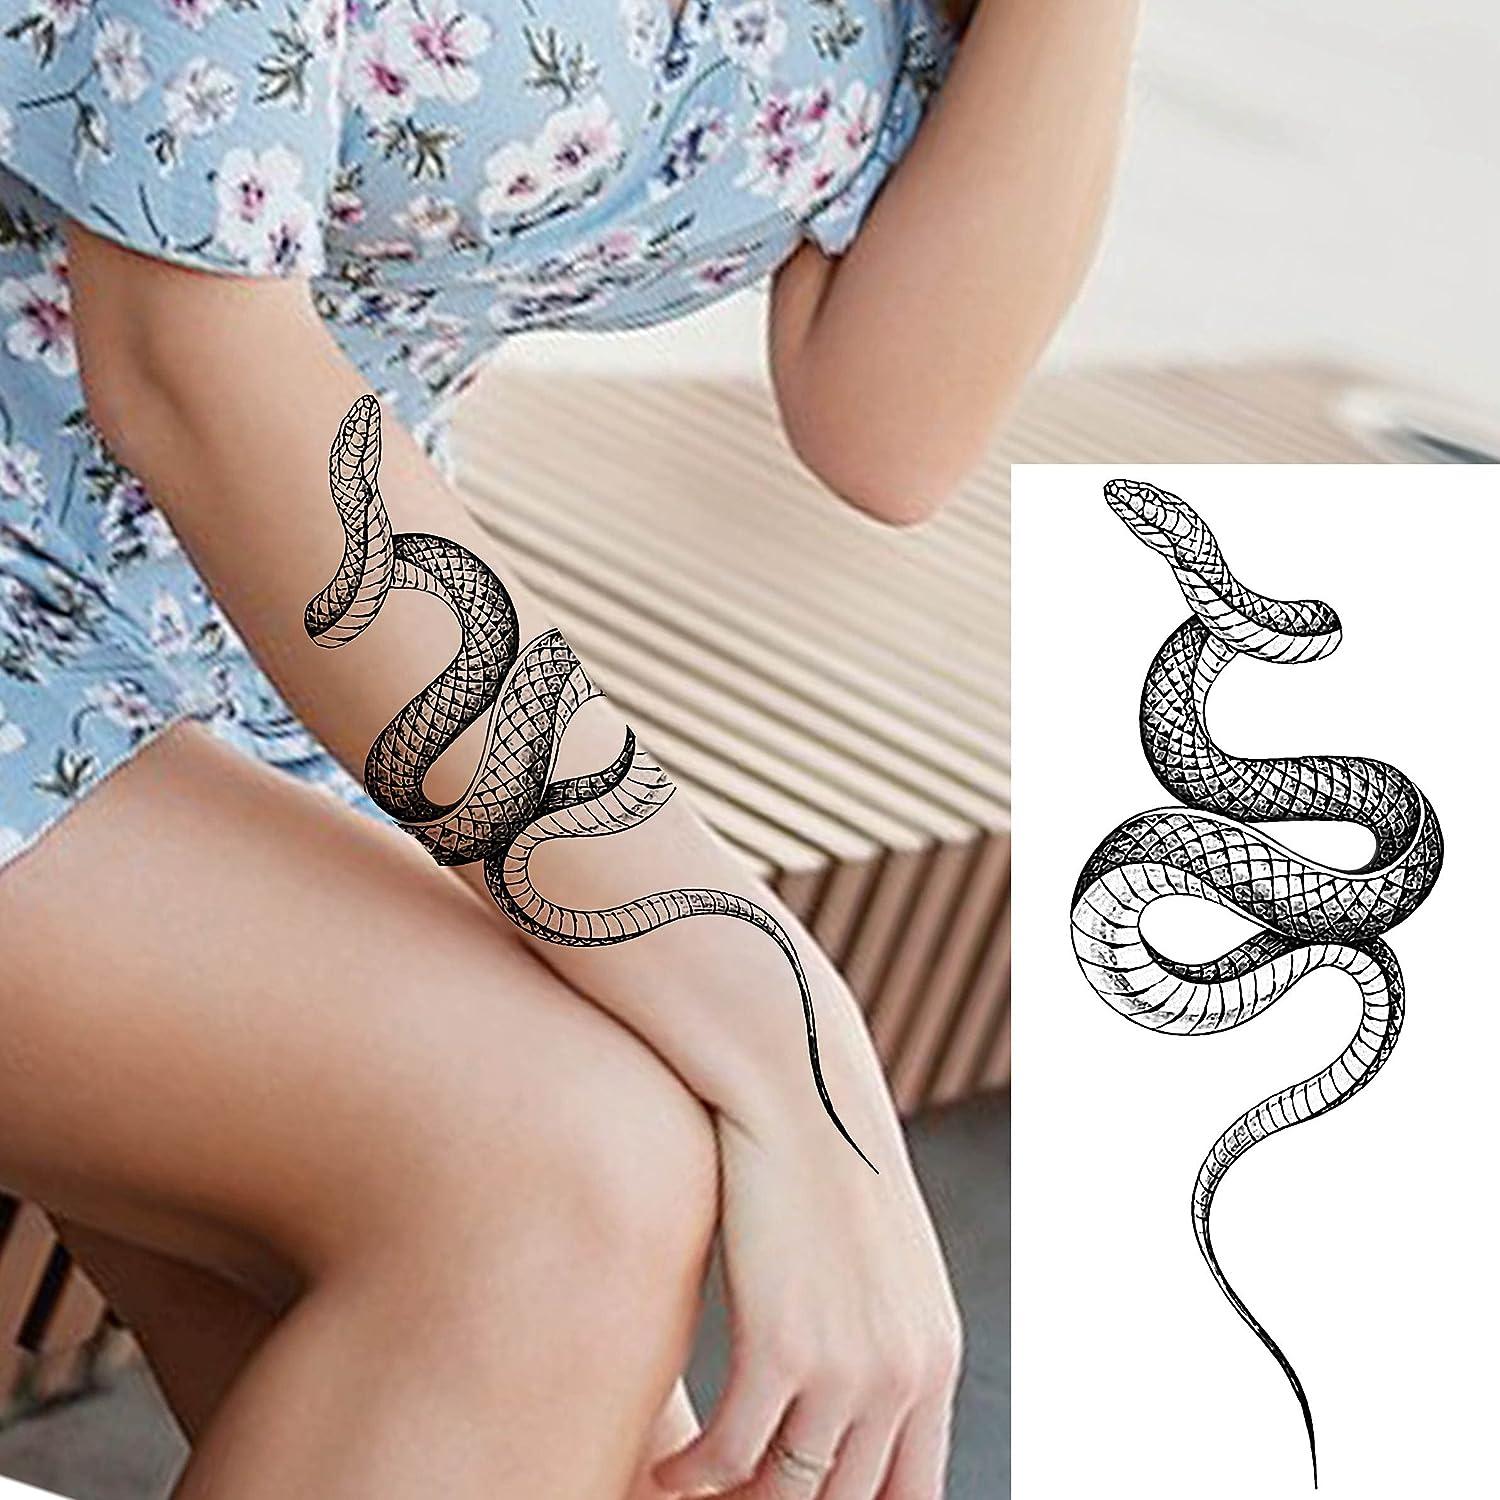 This Tattoo Artist Creates Amazing 3D Tattoos | This tattoo artists creates  super-realistic 3D tattoos! 👀🙌 | By UNILADFacebook